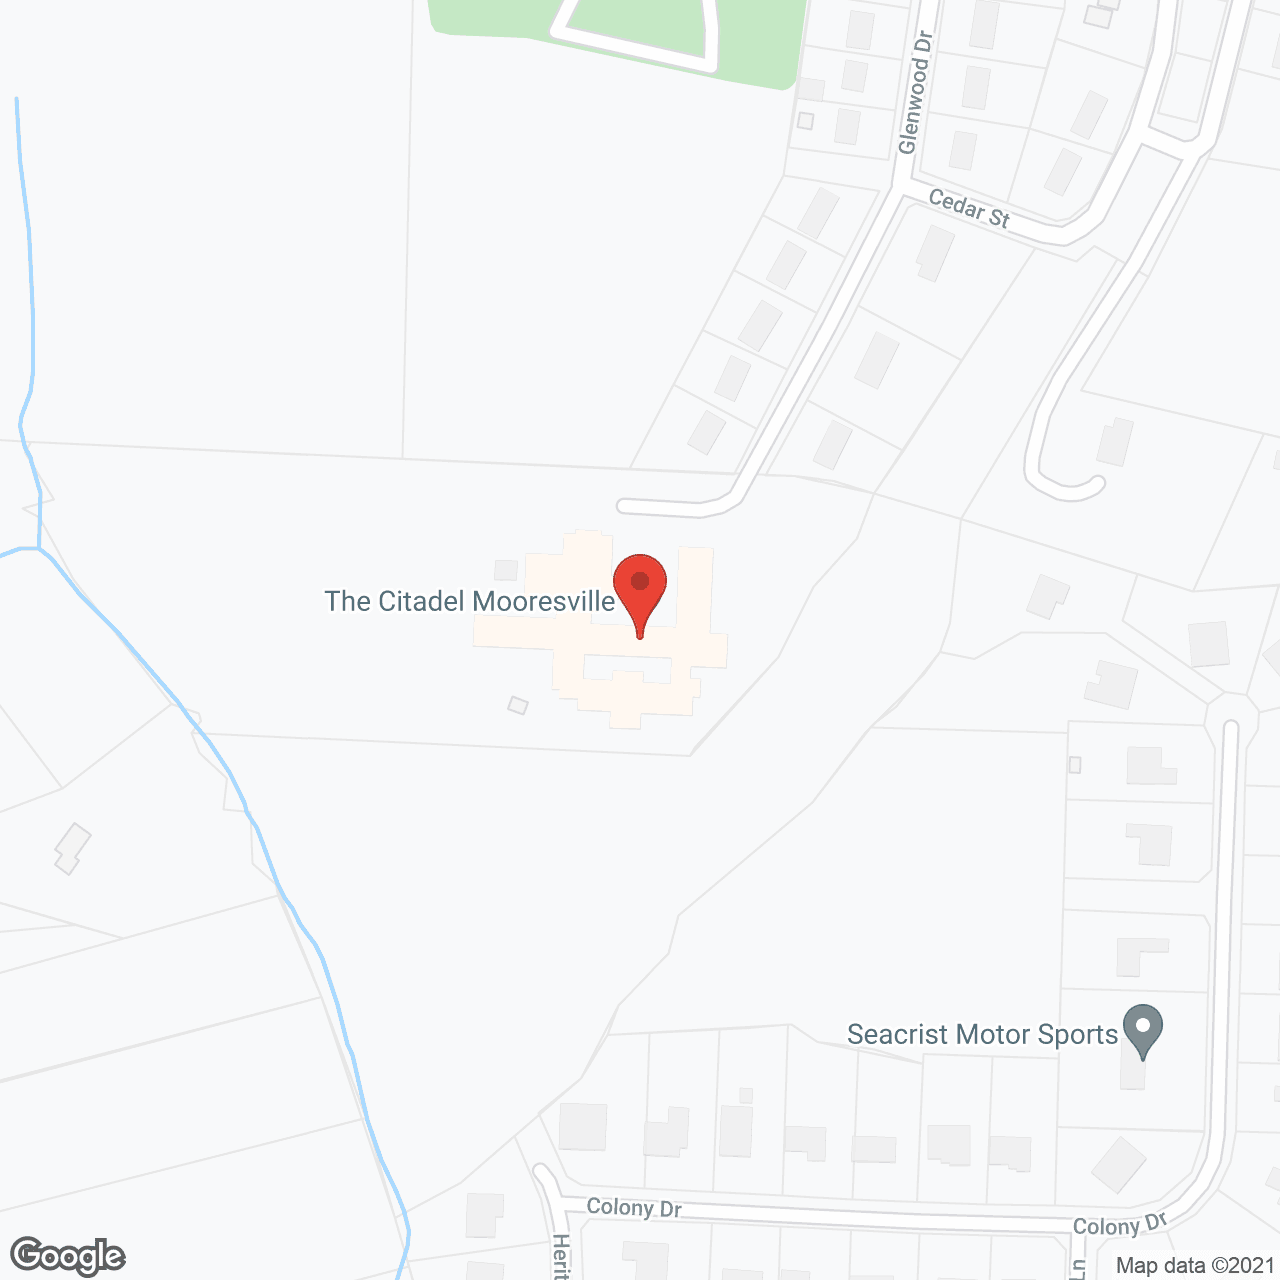 Mooresville Center in google map